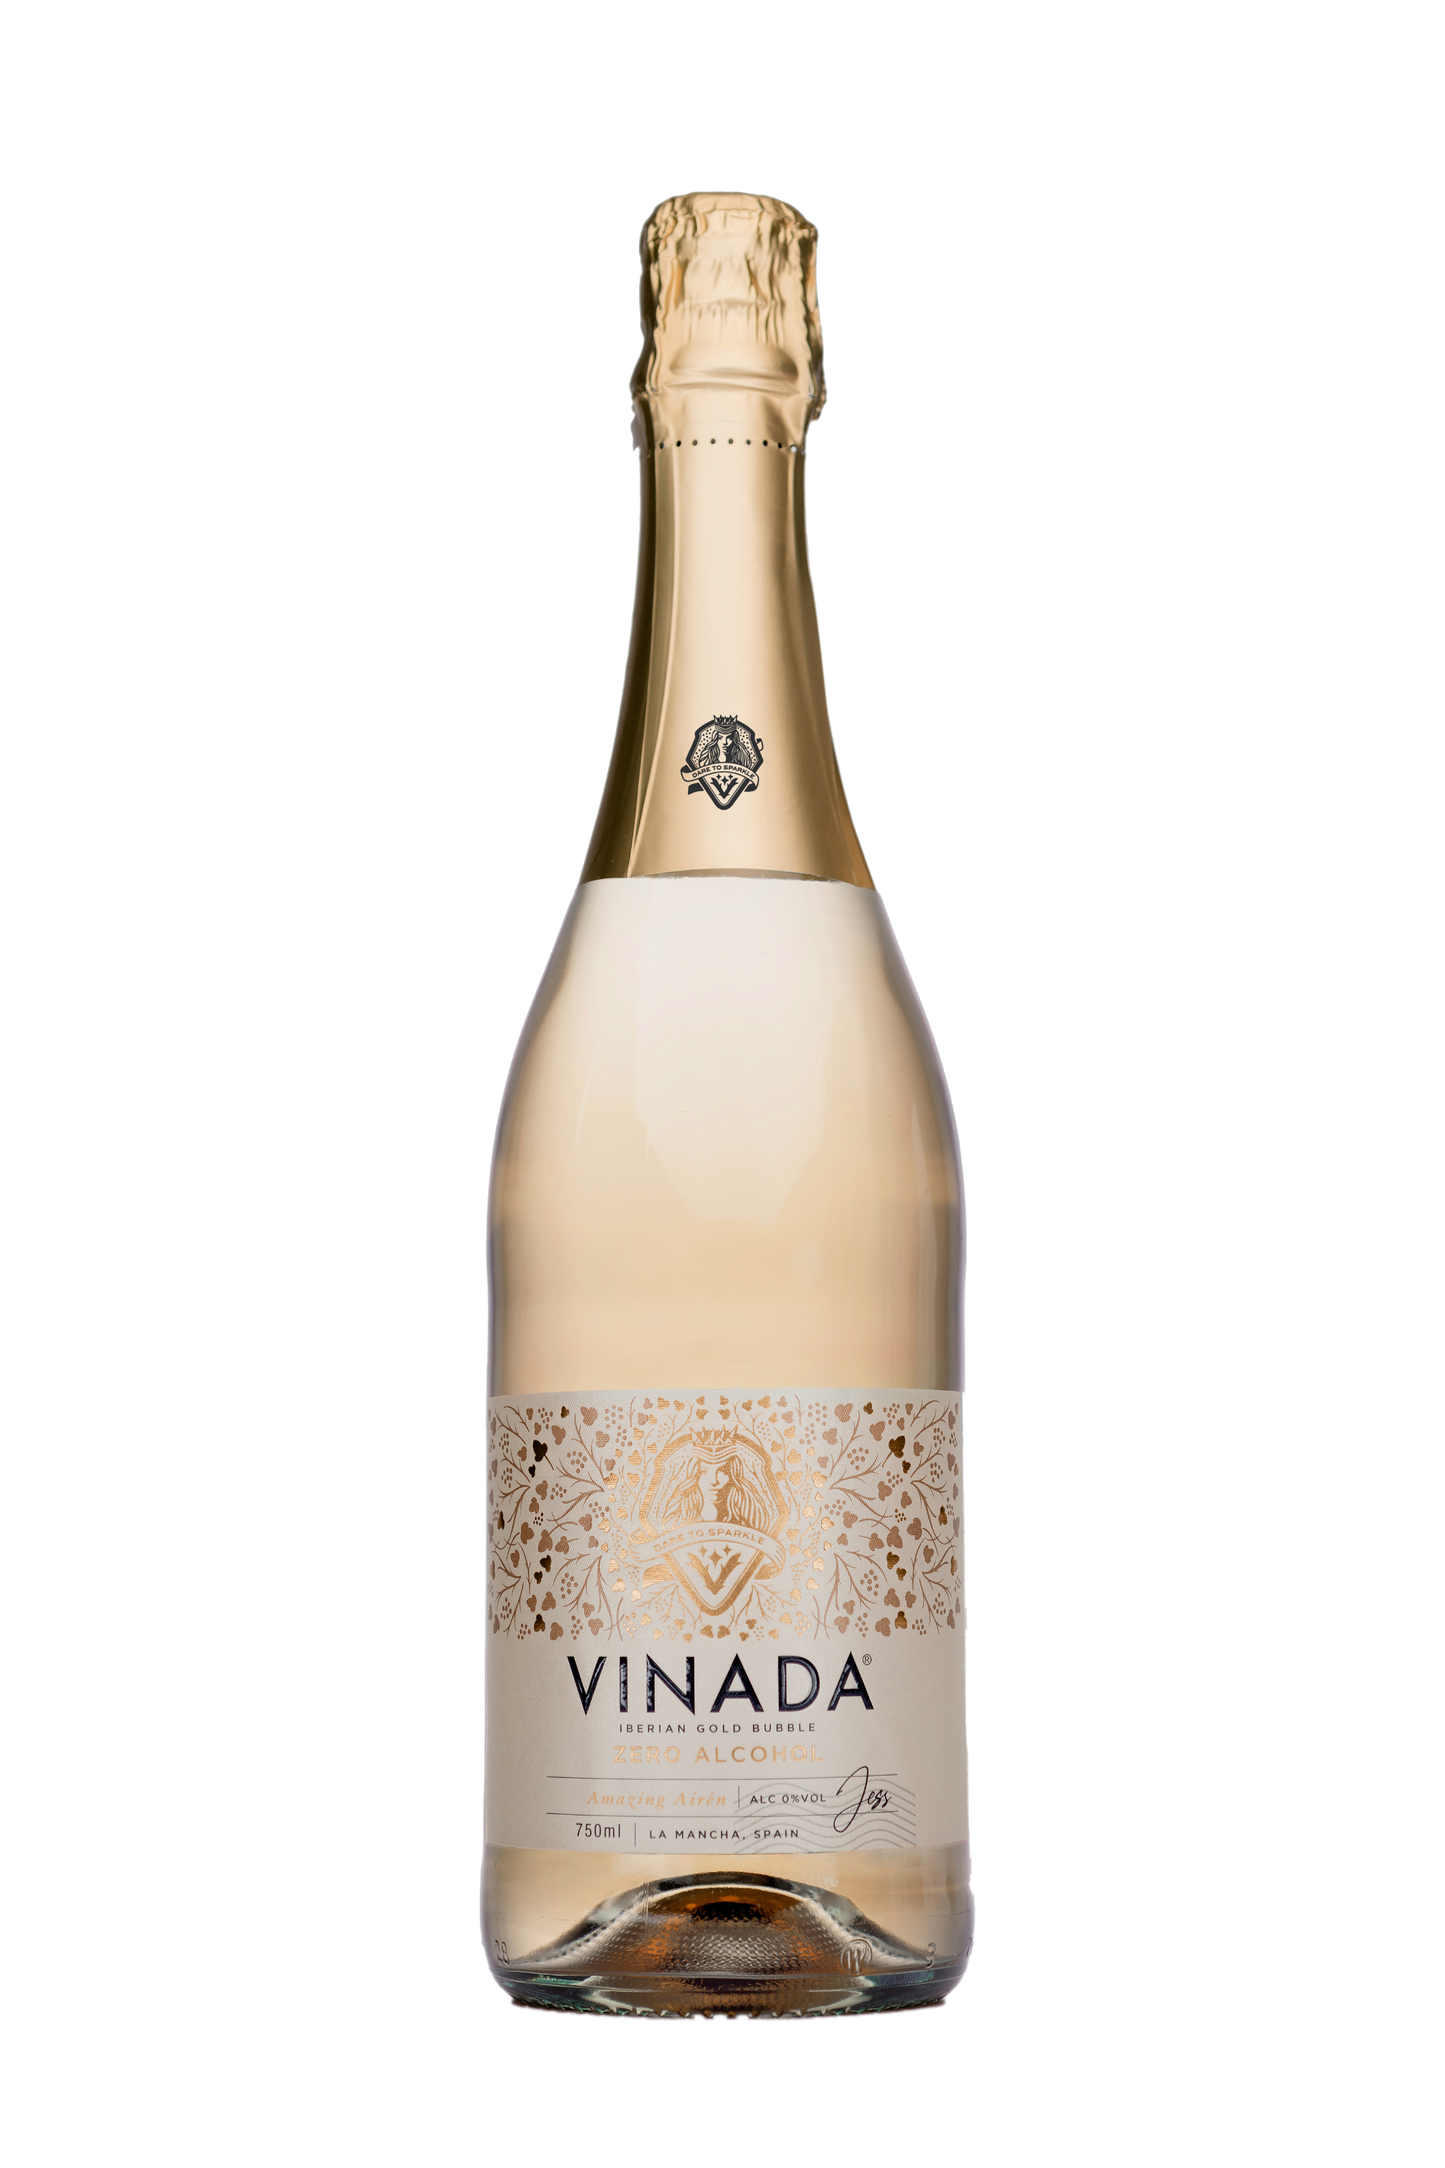 VINADA Amazing Airen Gold 750ml bottle